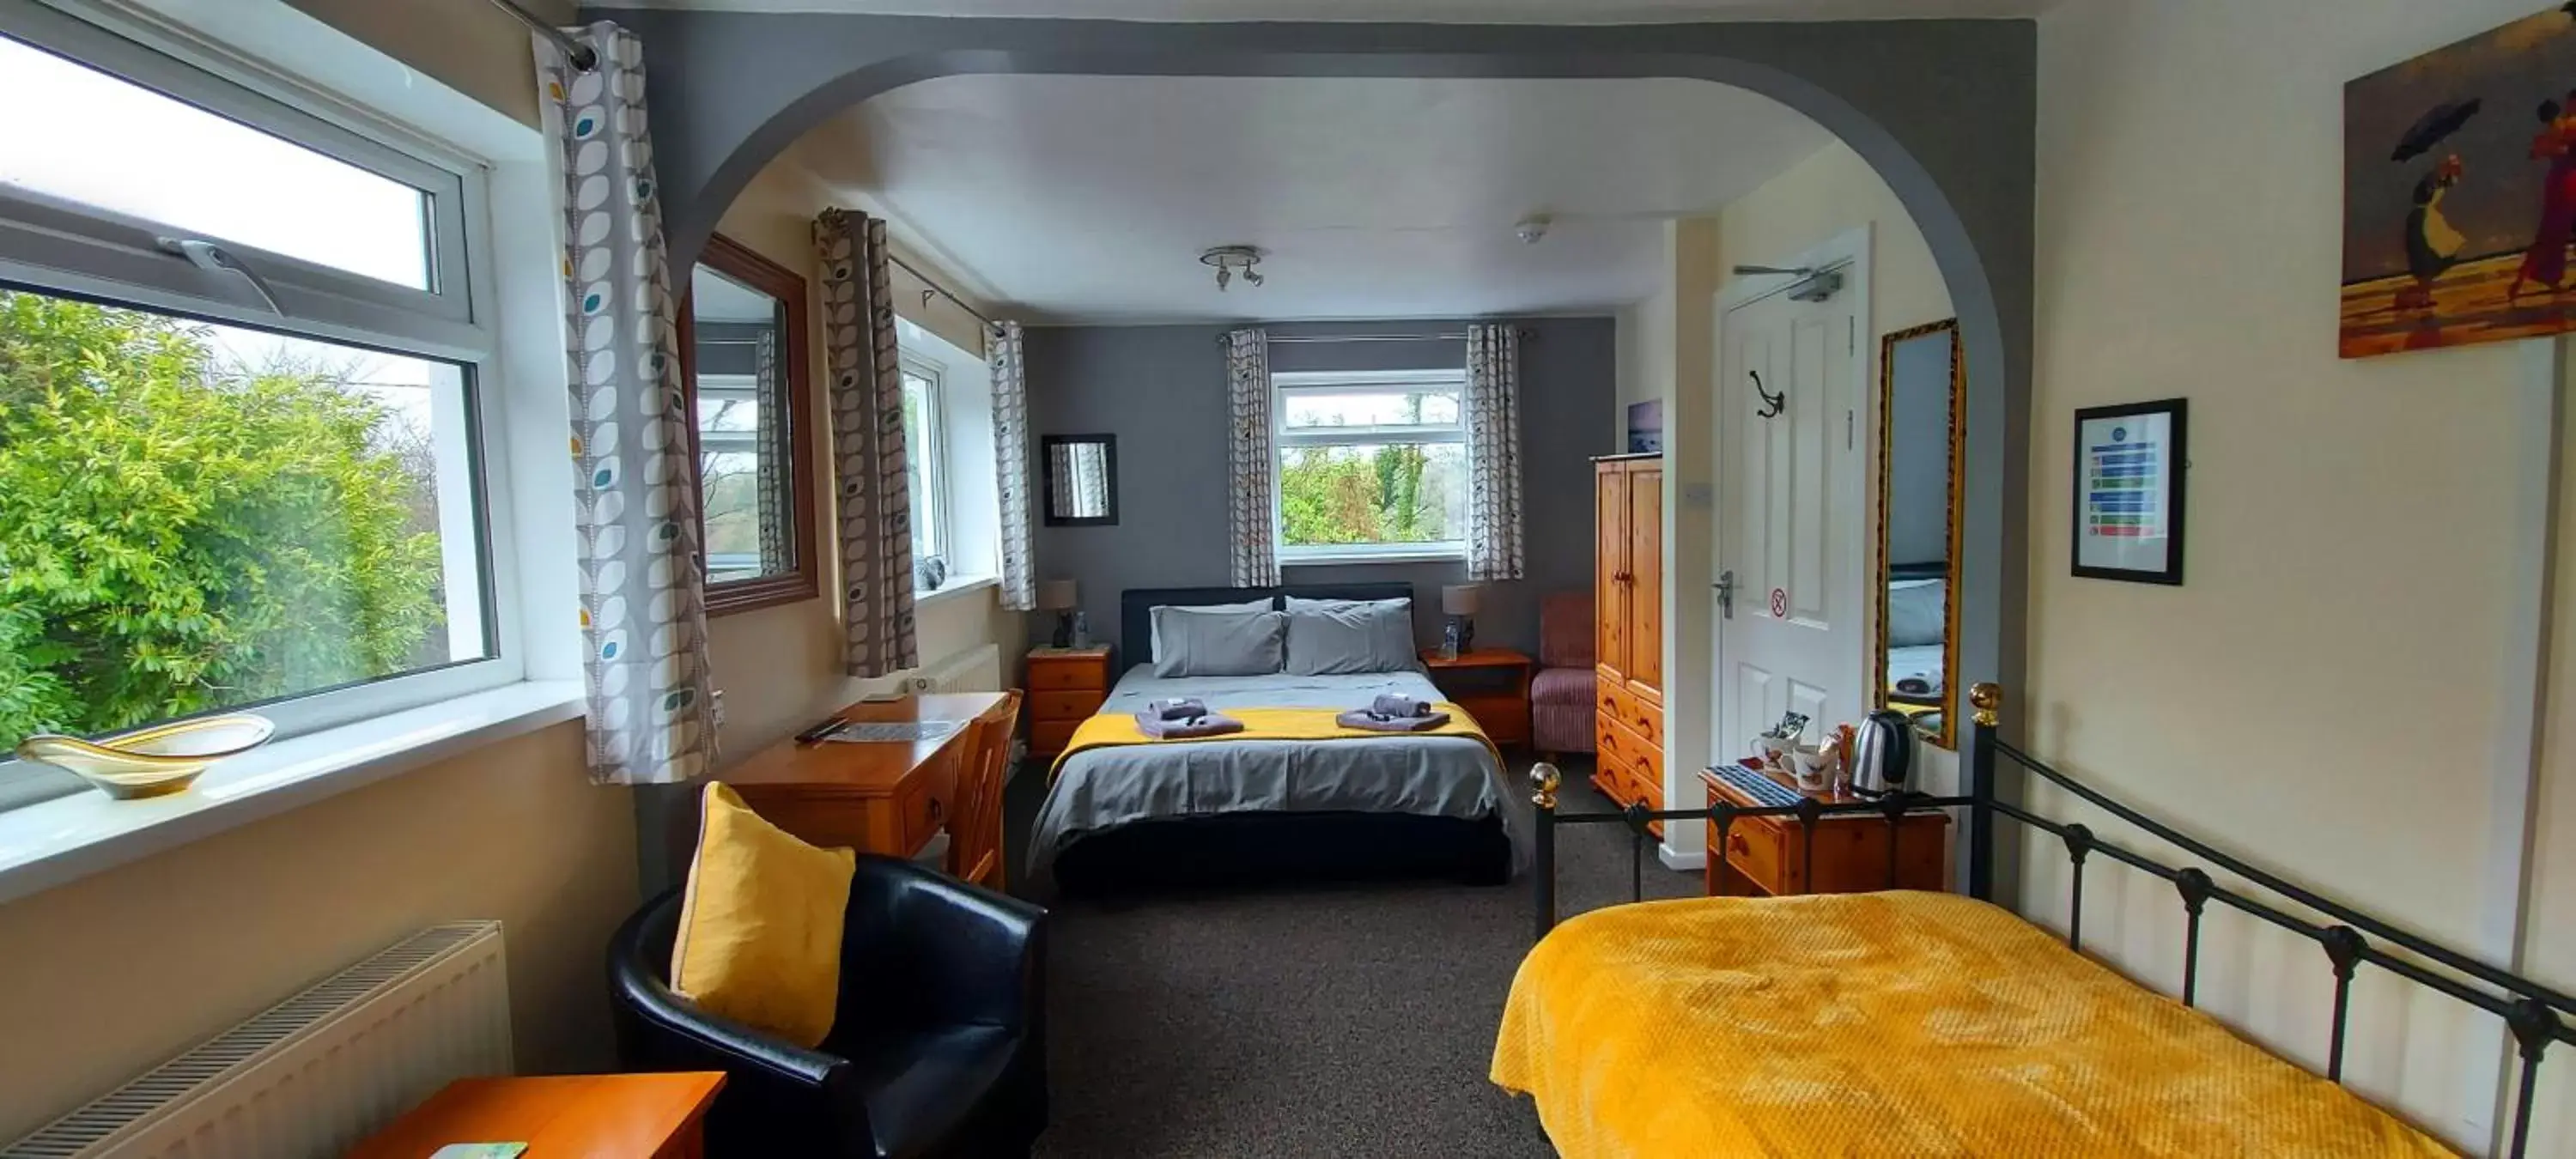 Bedroom, Seating Area in Sportsmans Valley Hotel